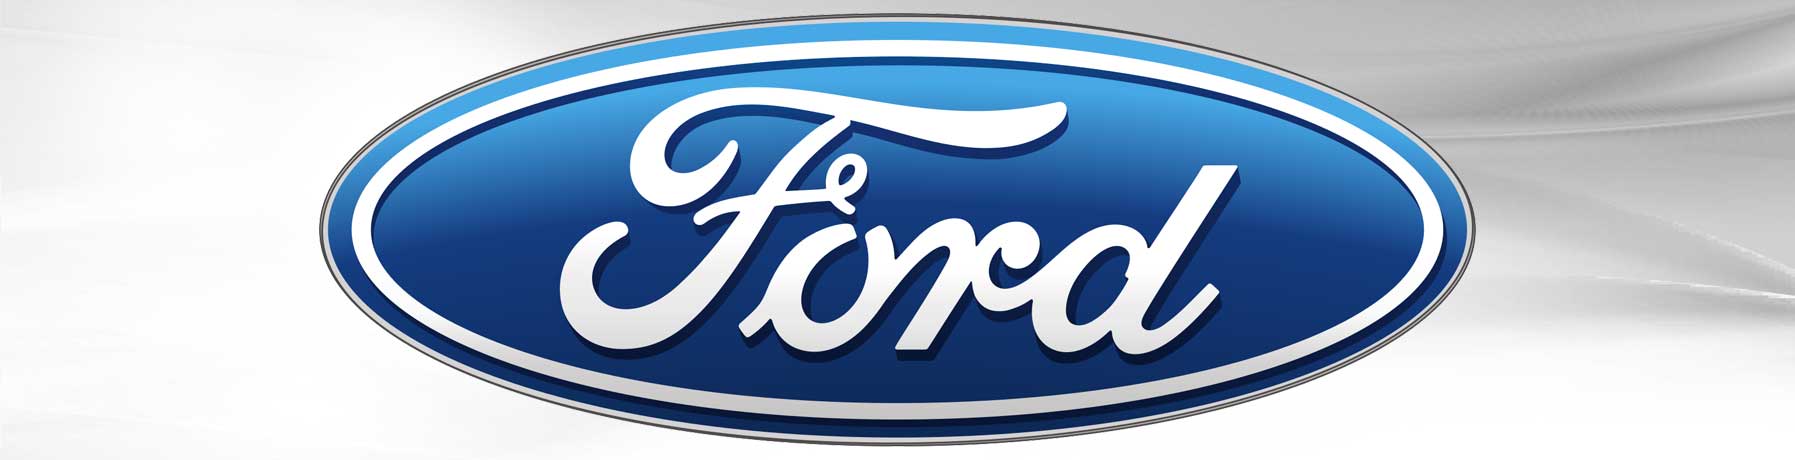 We service Ford cars & trucks